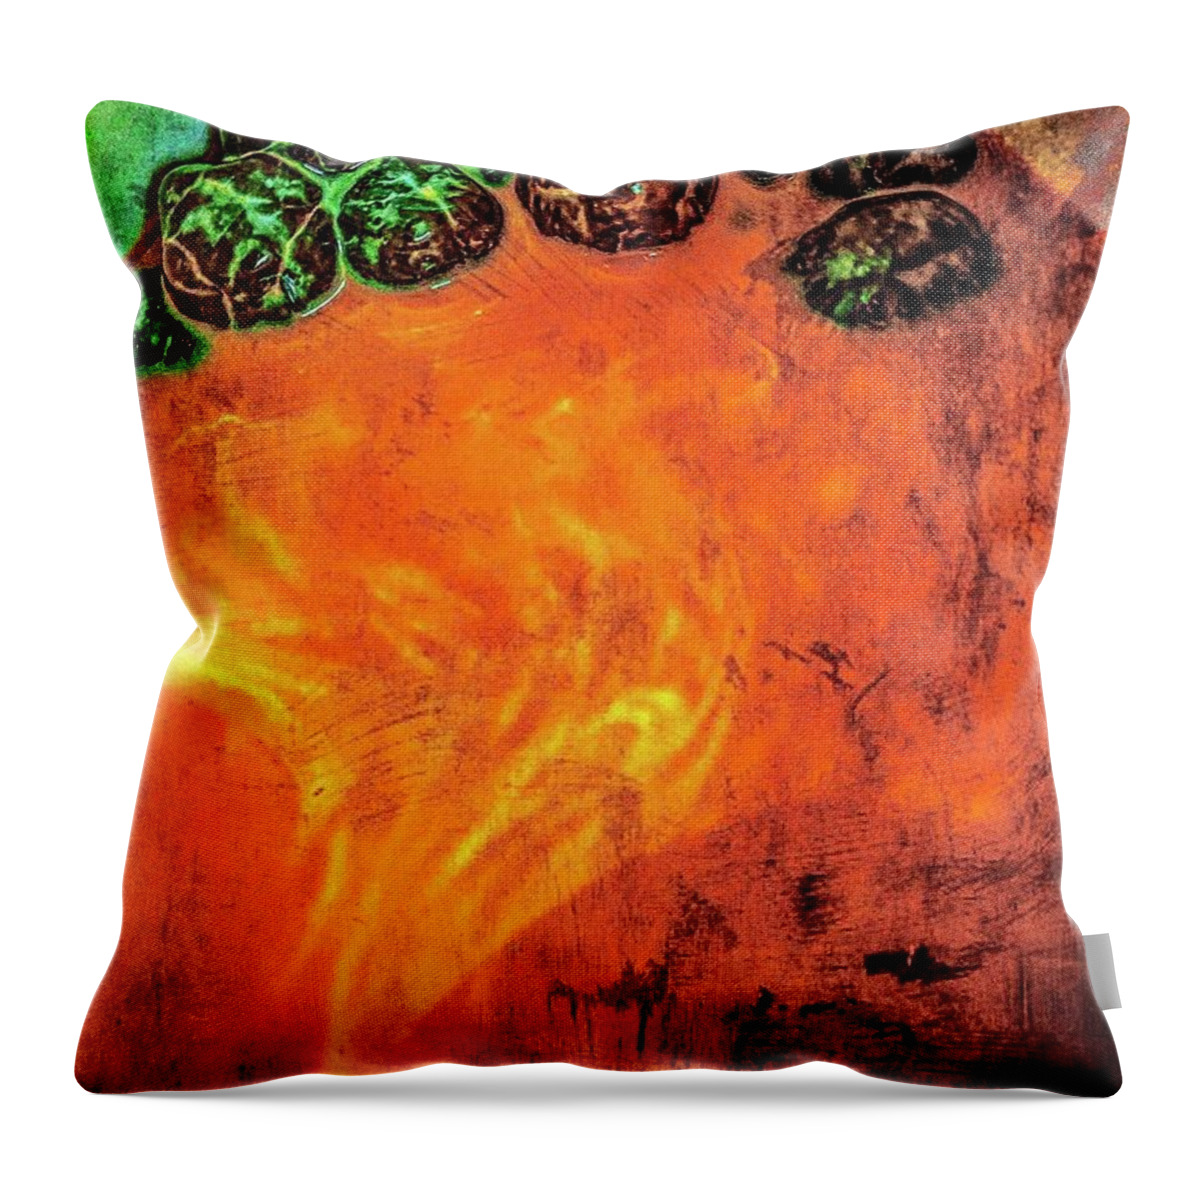 Boba Earl Grey Tea Throw Pillow featuring the digital art Boba Sun by Denise Railey